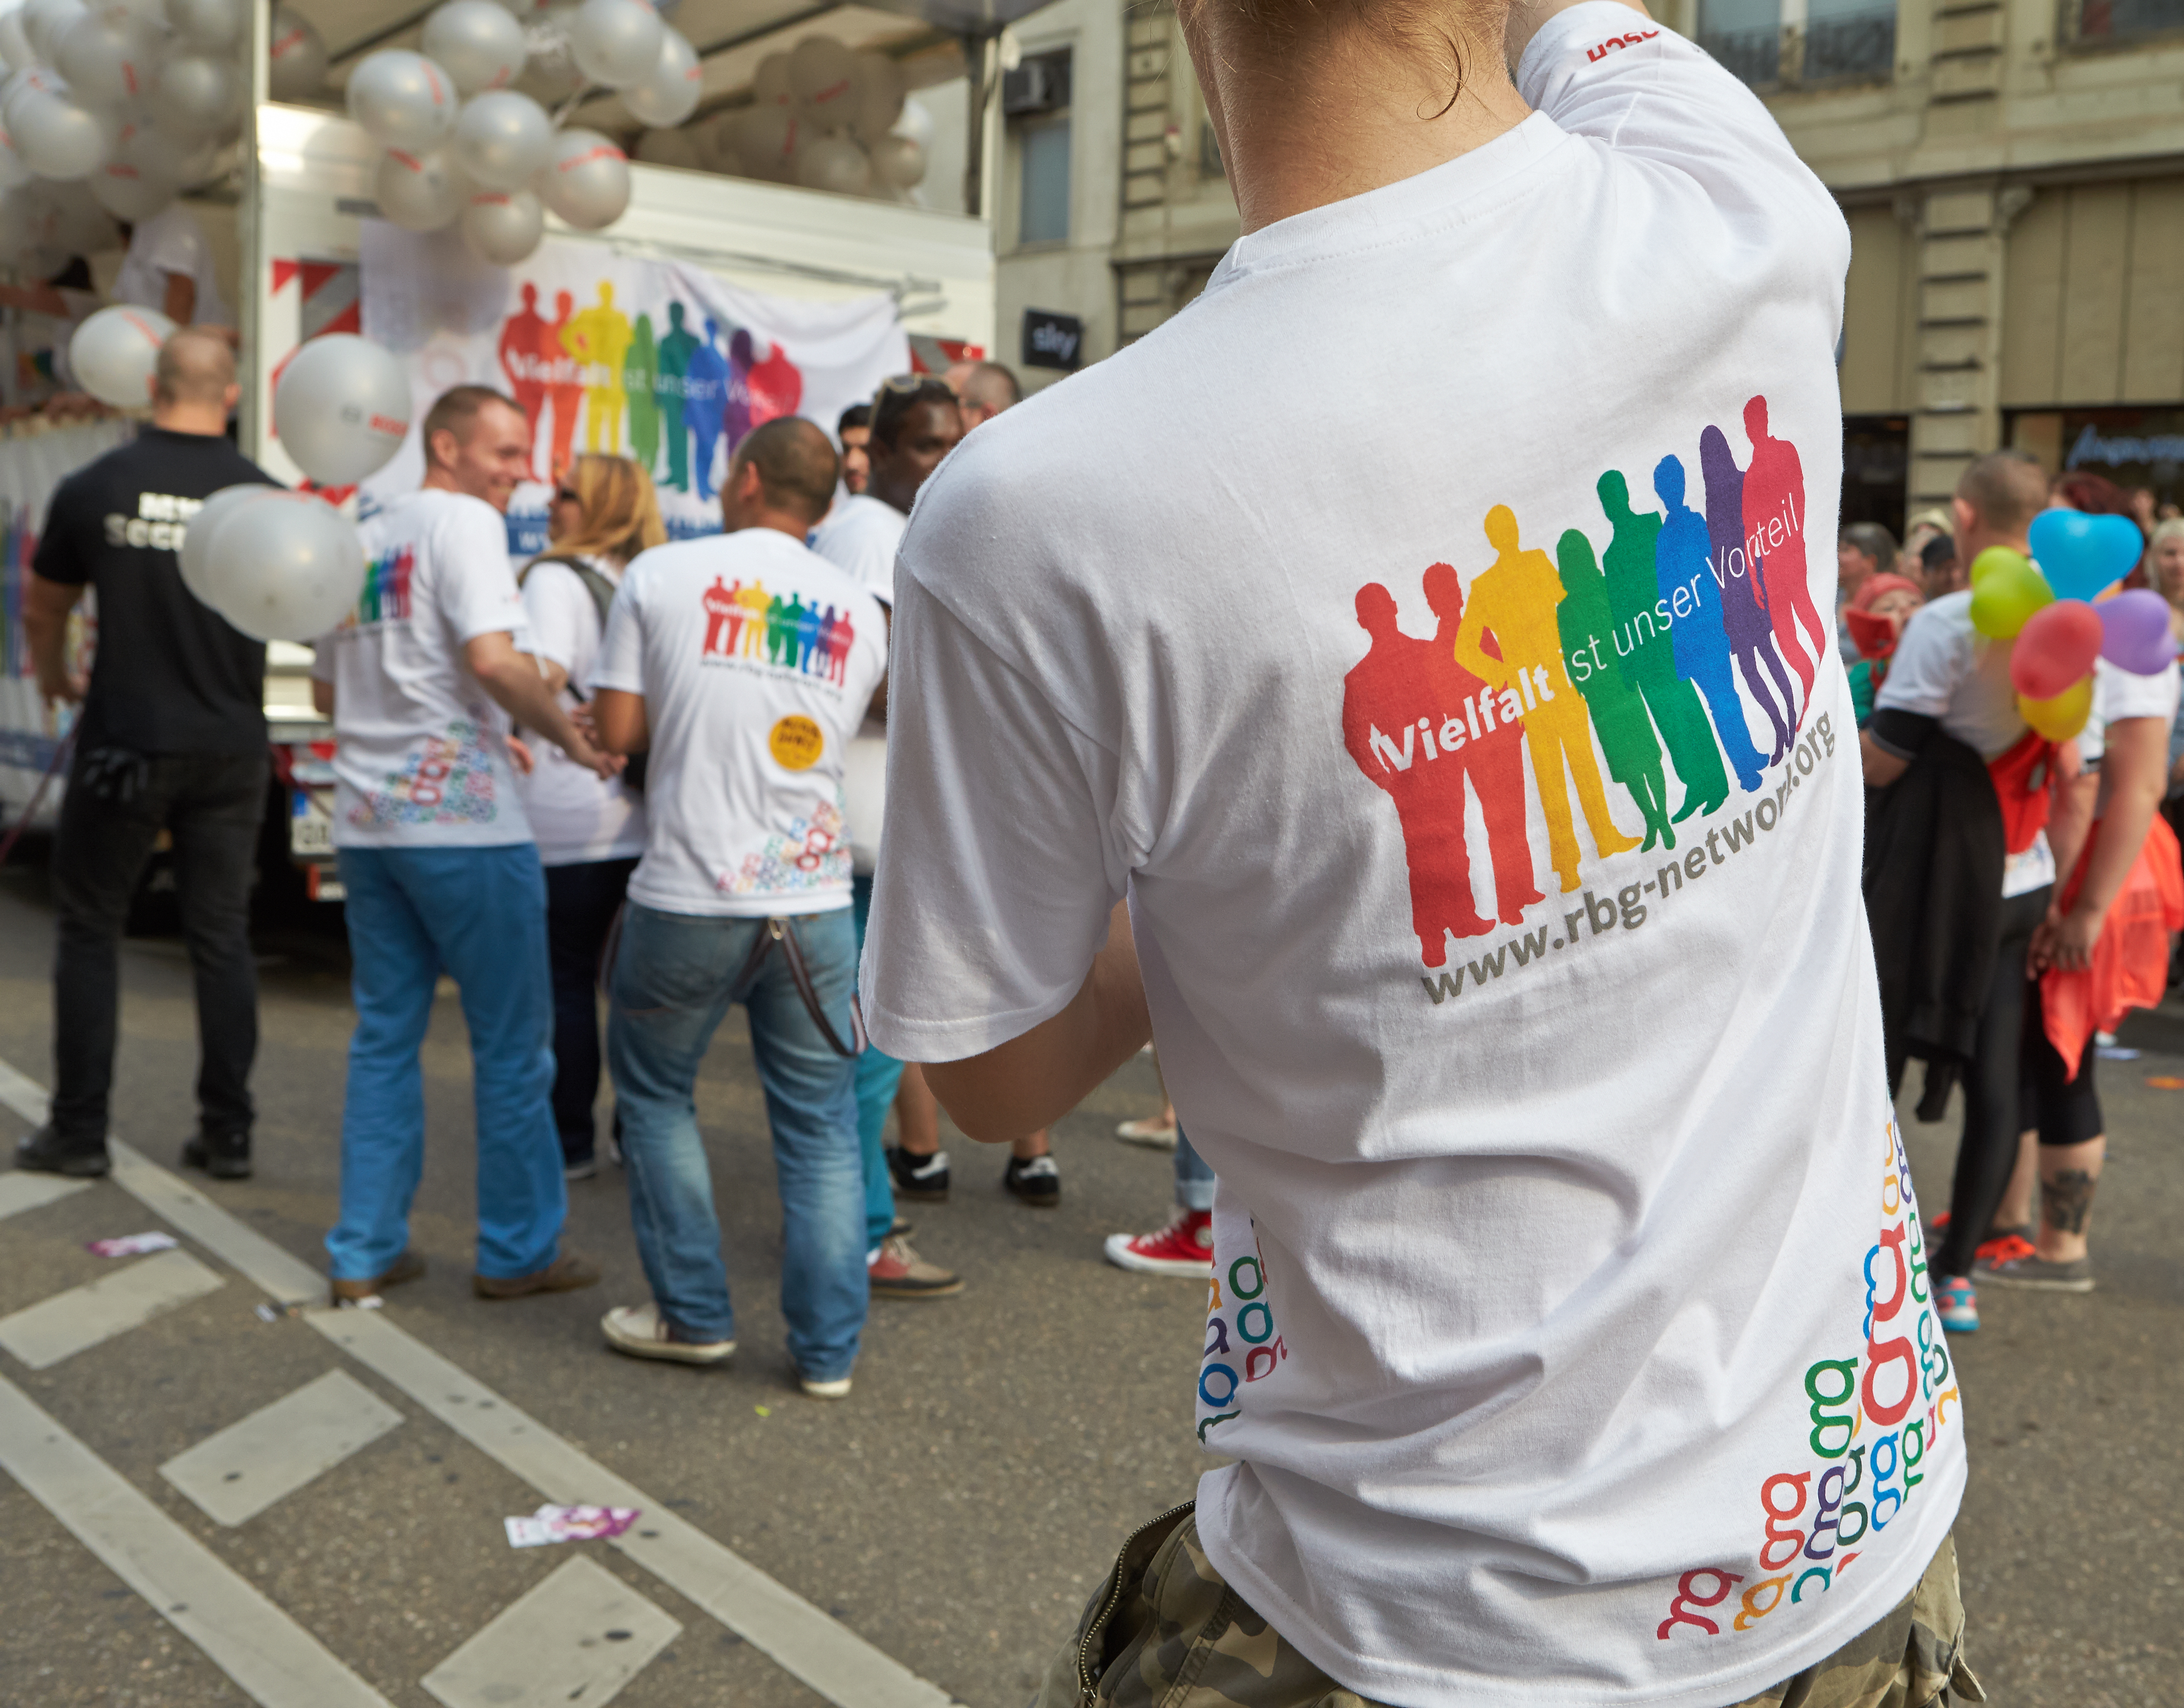 Bosch LGBTI network's social engagement